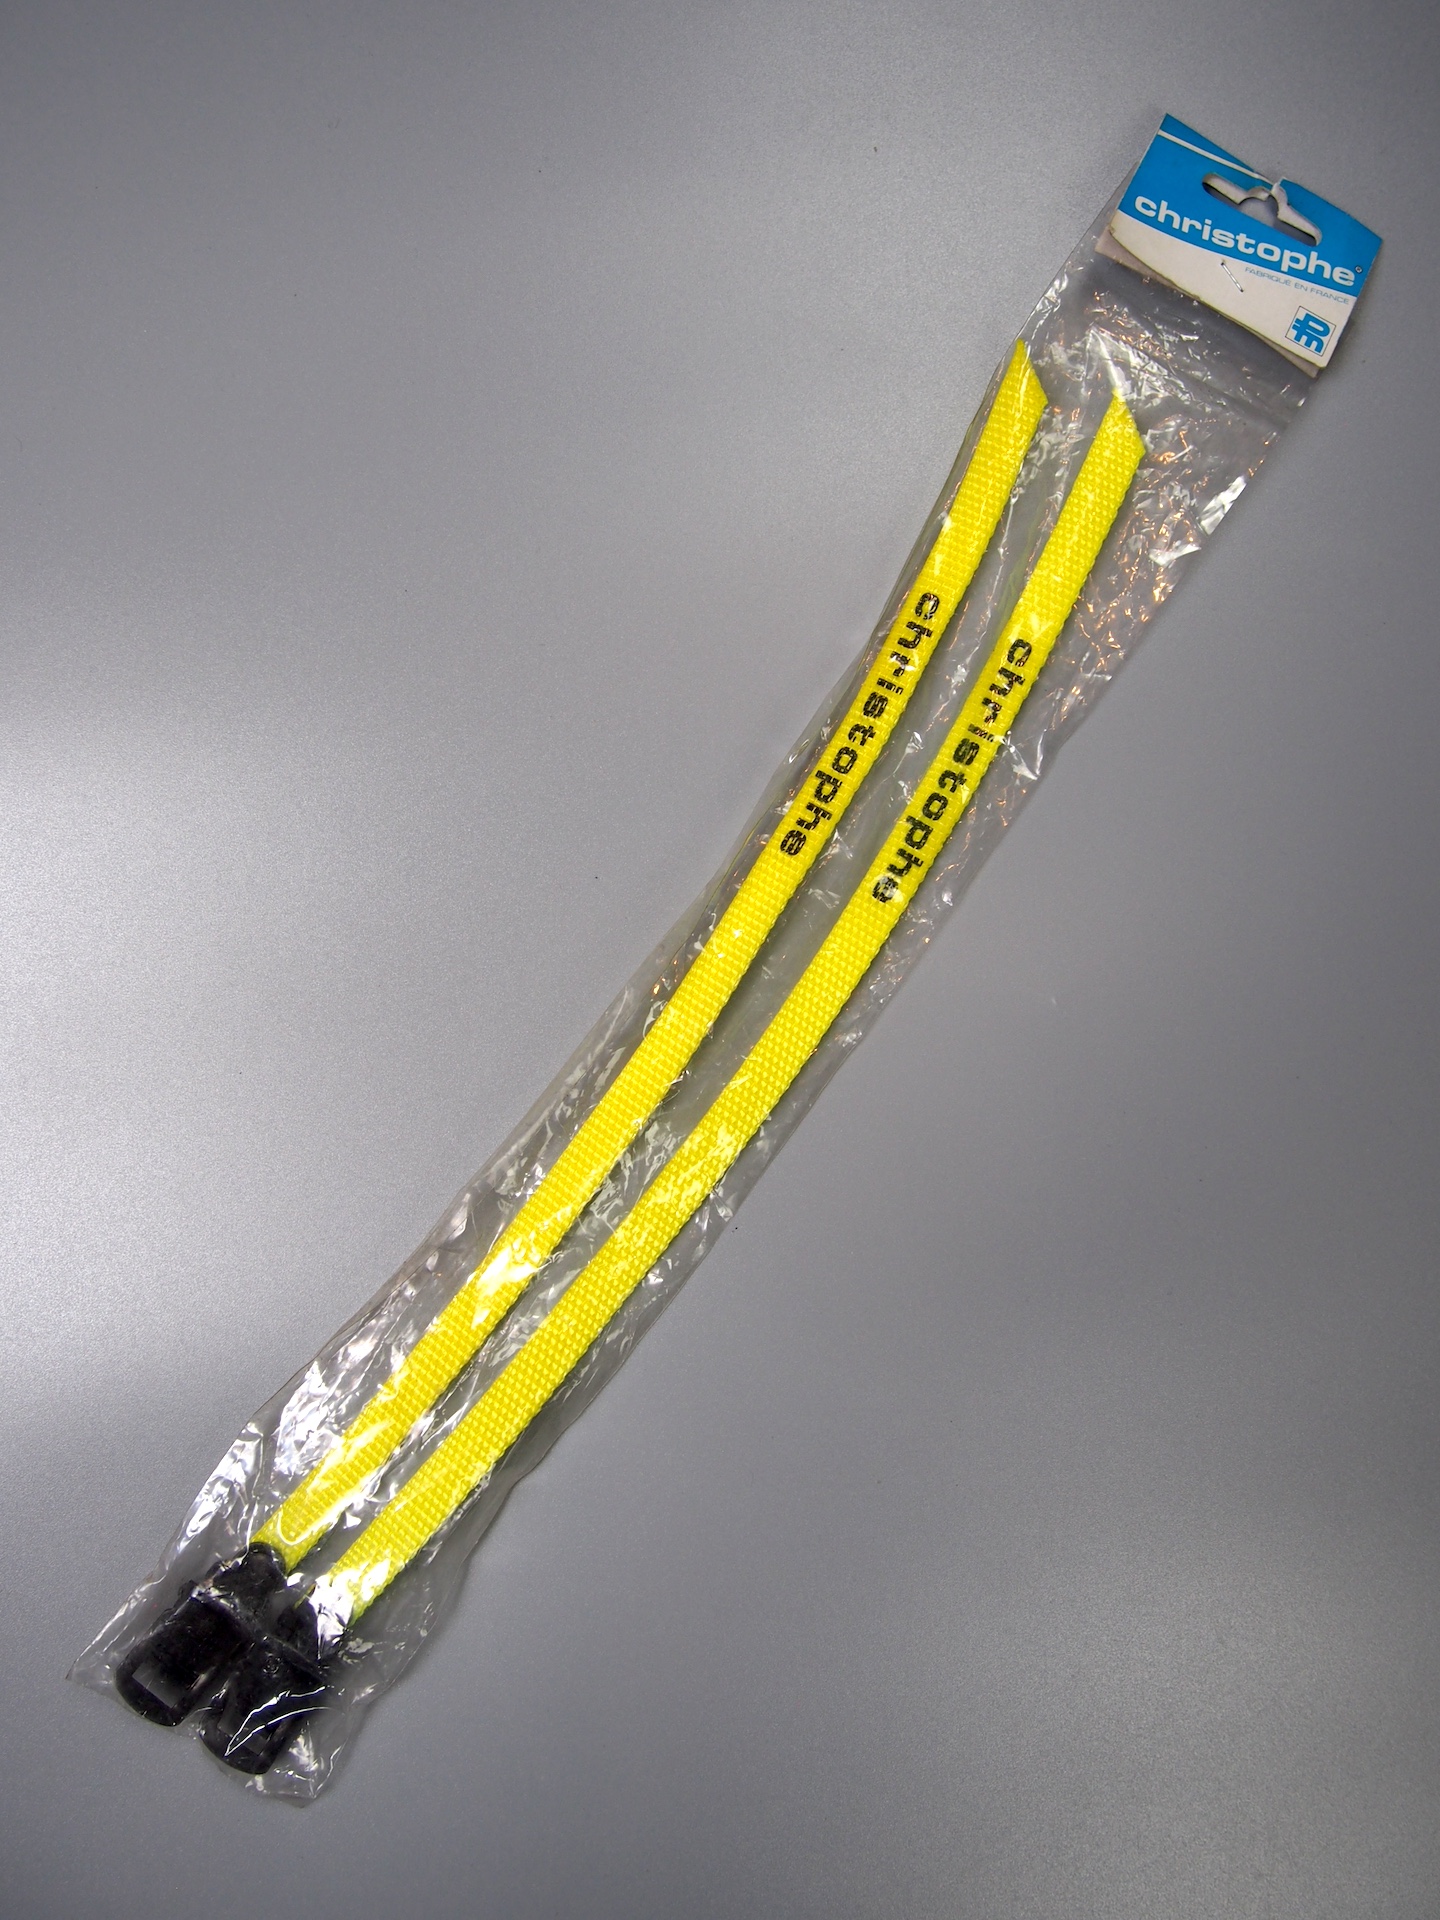 Mt. Christophe nylon toe straps – Neon yellow